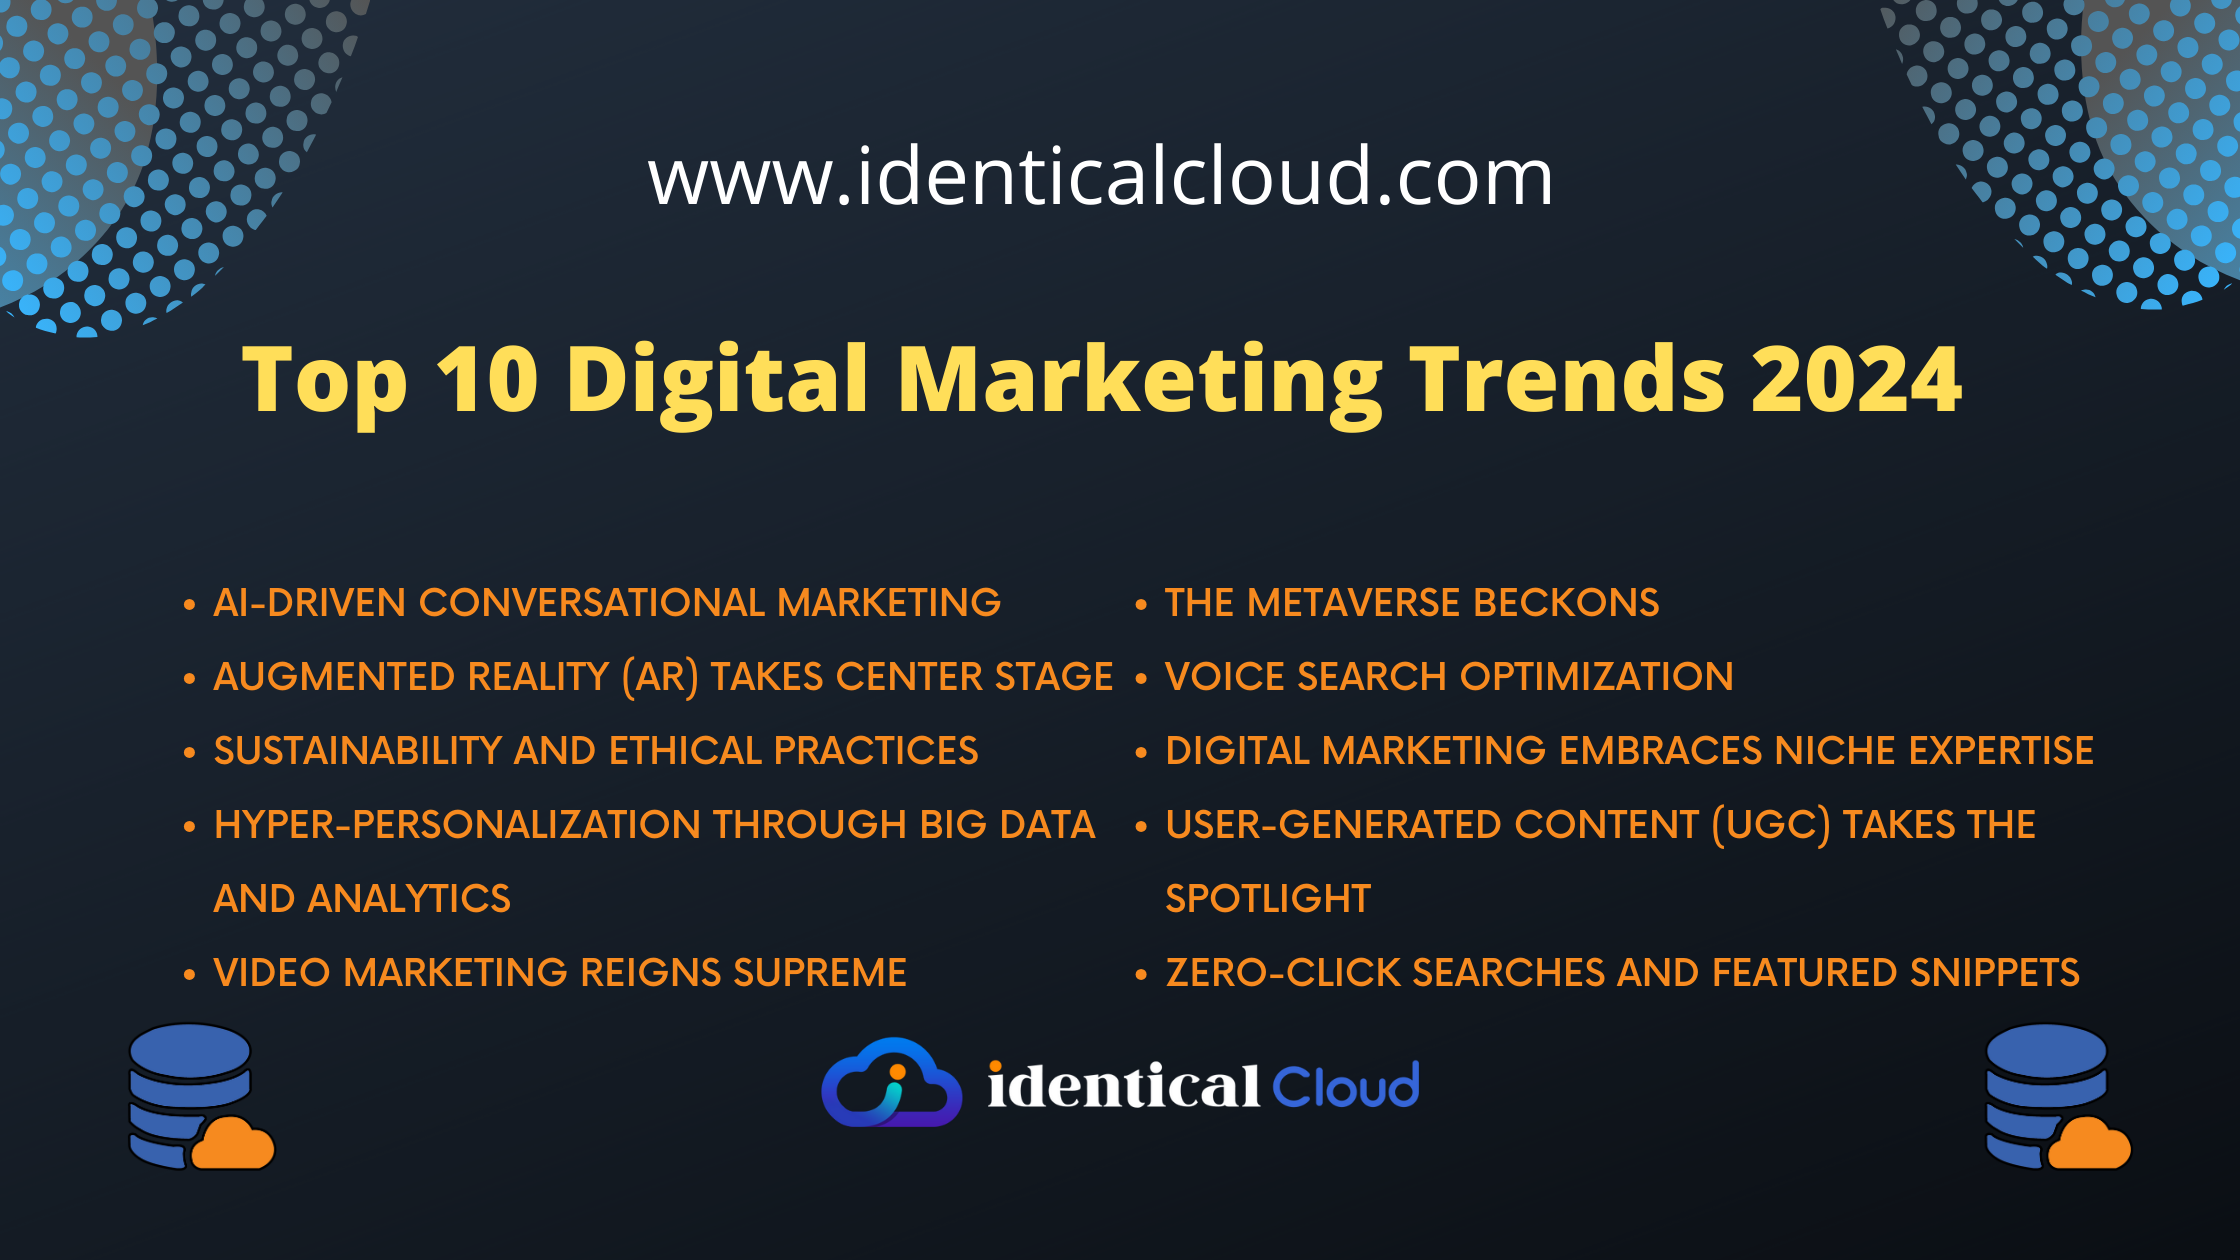 Top 10 Digital Marketing Trends 2024 - identicalcloud.com